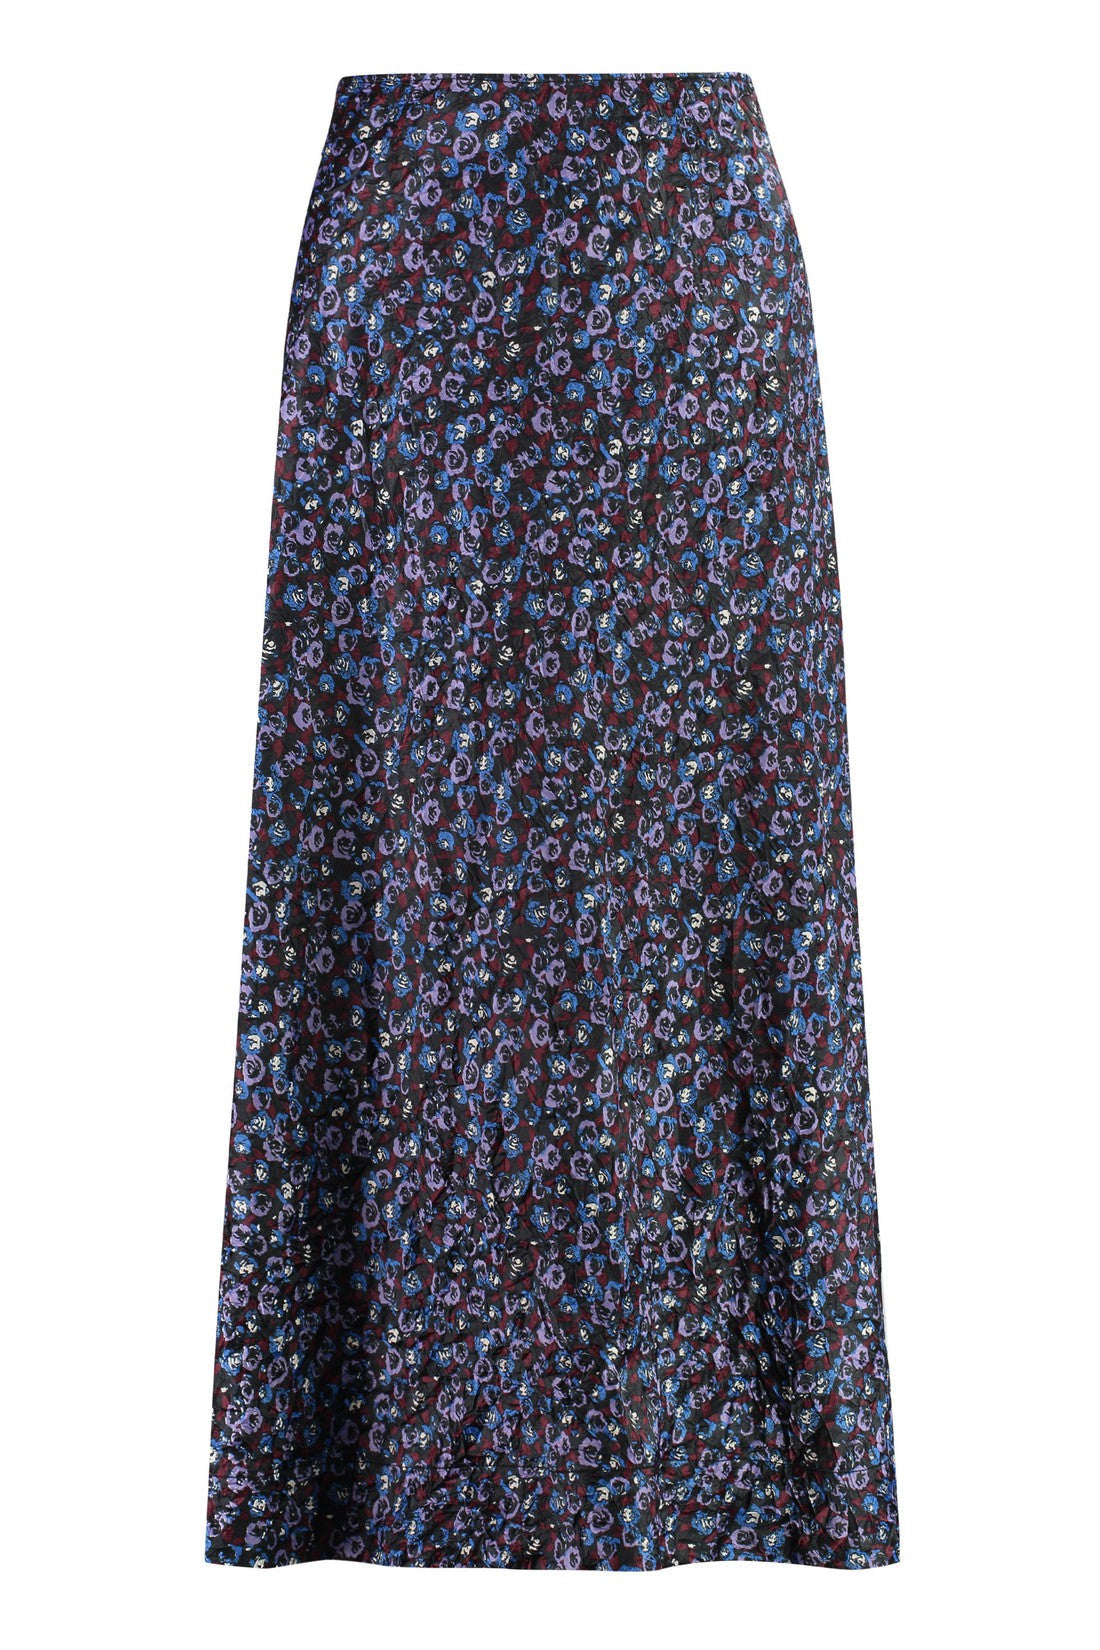 GANNI-OUTLET-SALE-Printed satin skirt-ARCHIVIST